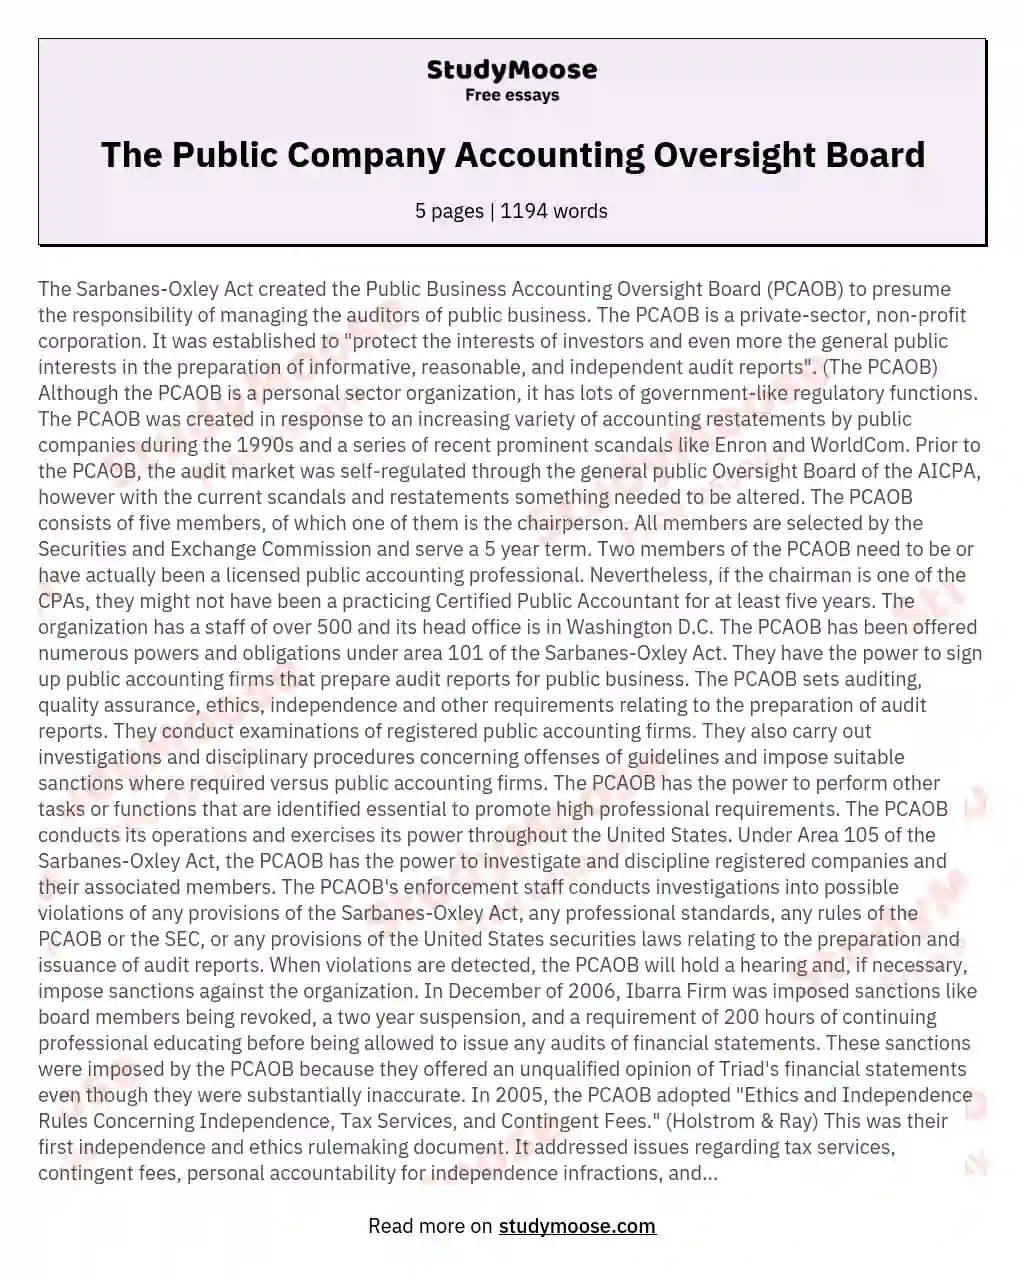 The Public Company Accounting Oversight Board essay